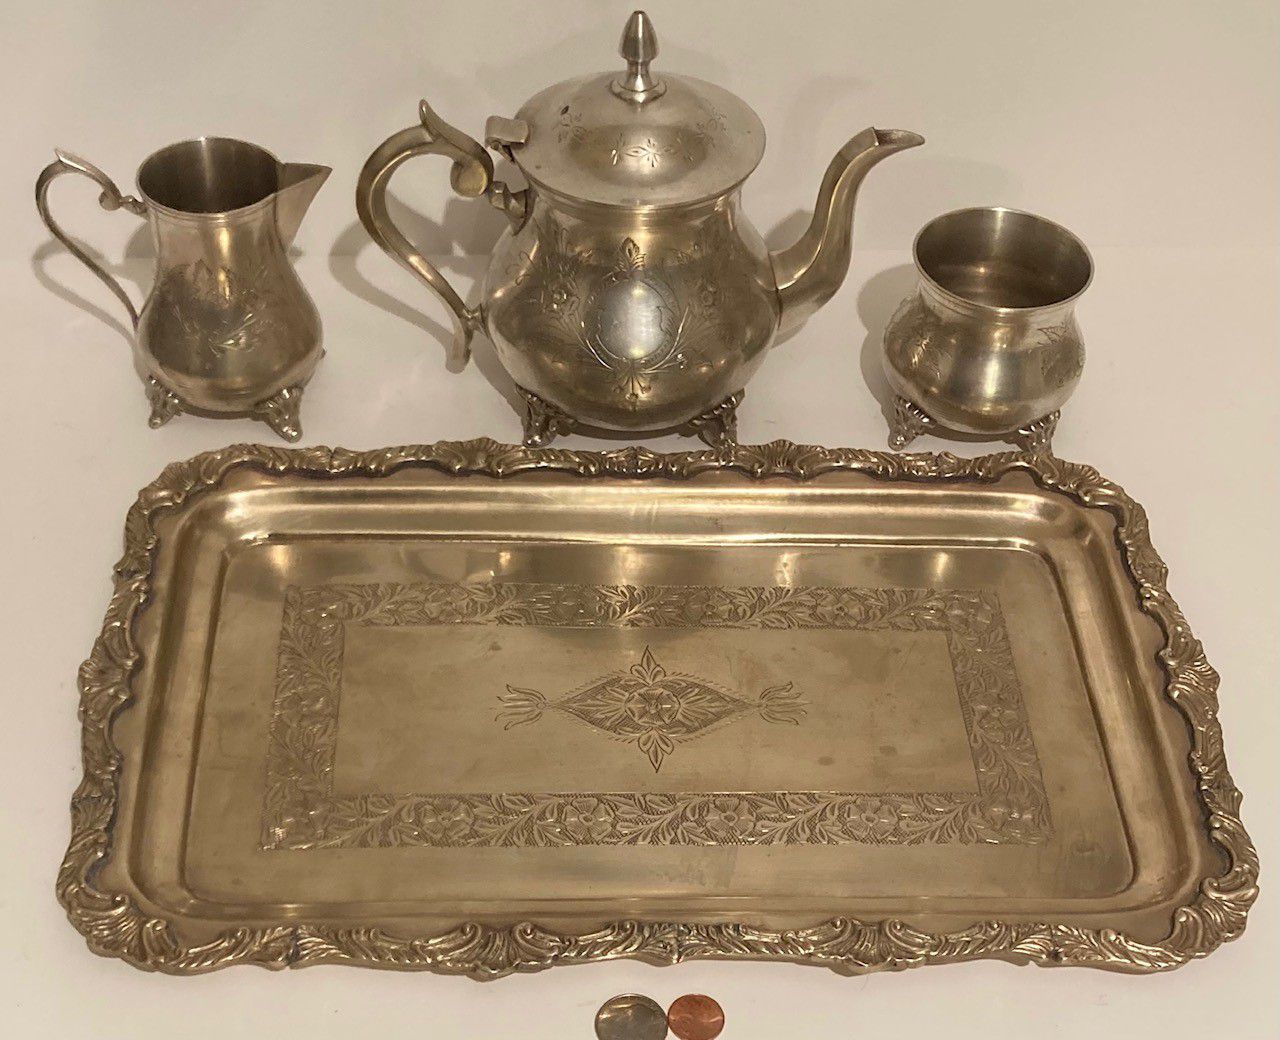 Vintage Metal Silver Teapot Set, Serving Tray, Heavy Duty, 15 1/2" x 10" Tray Size, Home Decor, Kitchen Decor, Table Display, Shelf Display